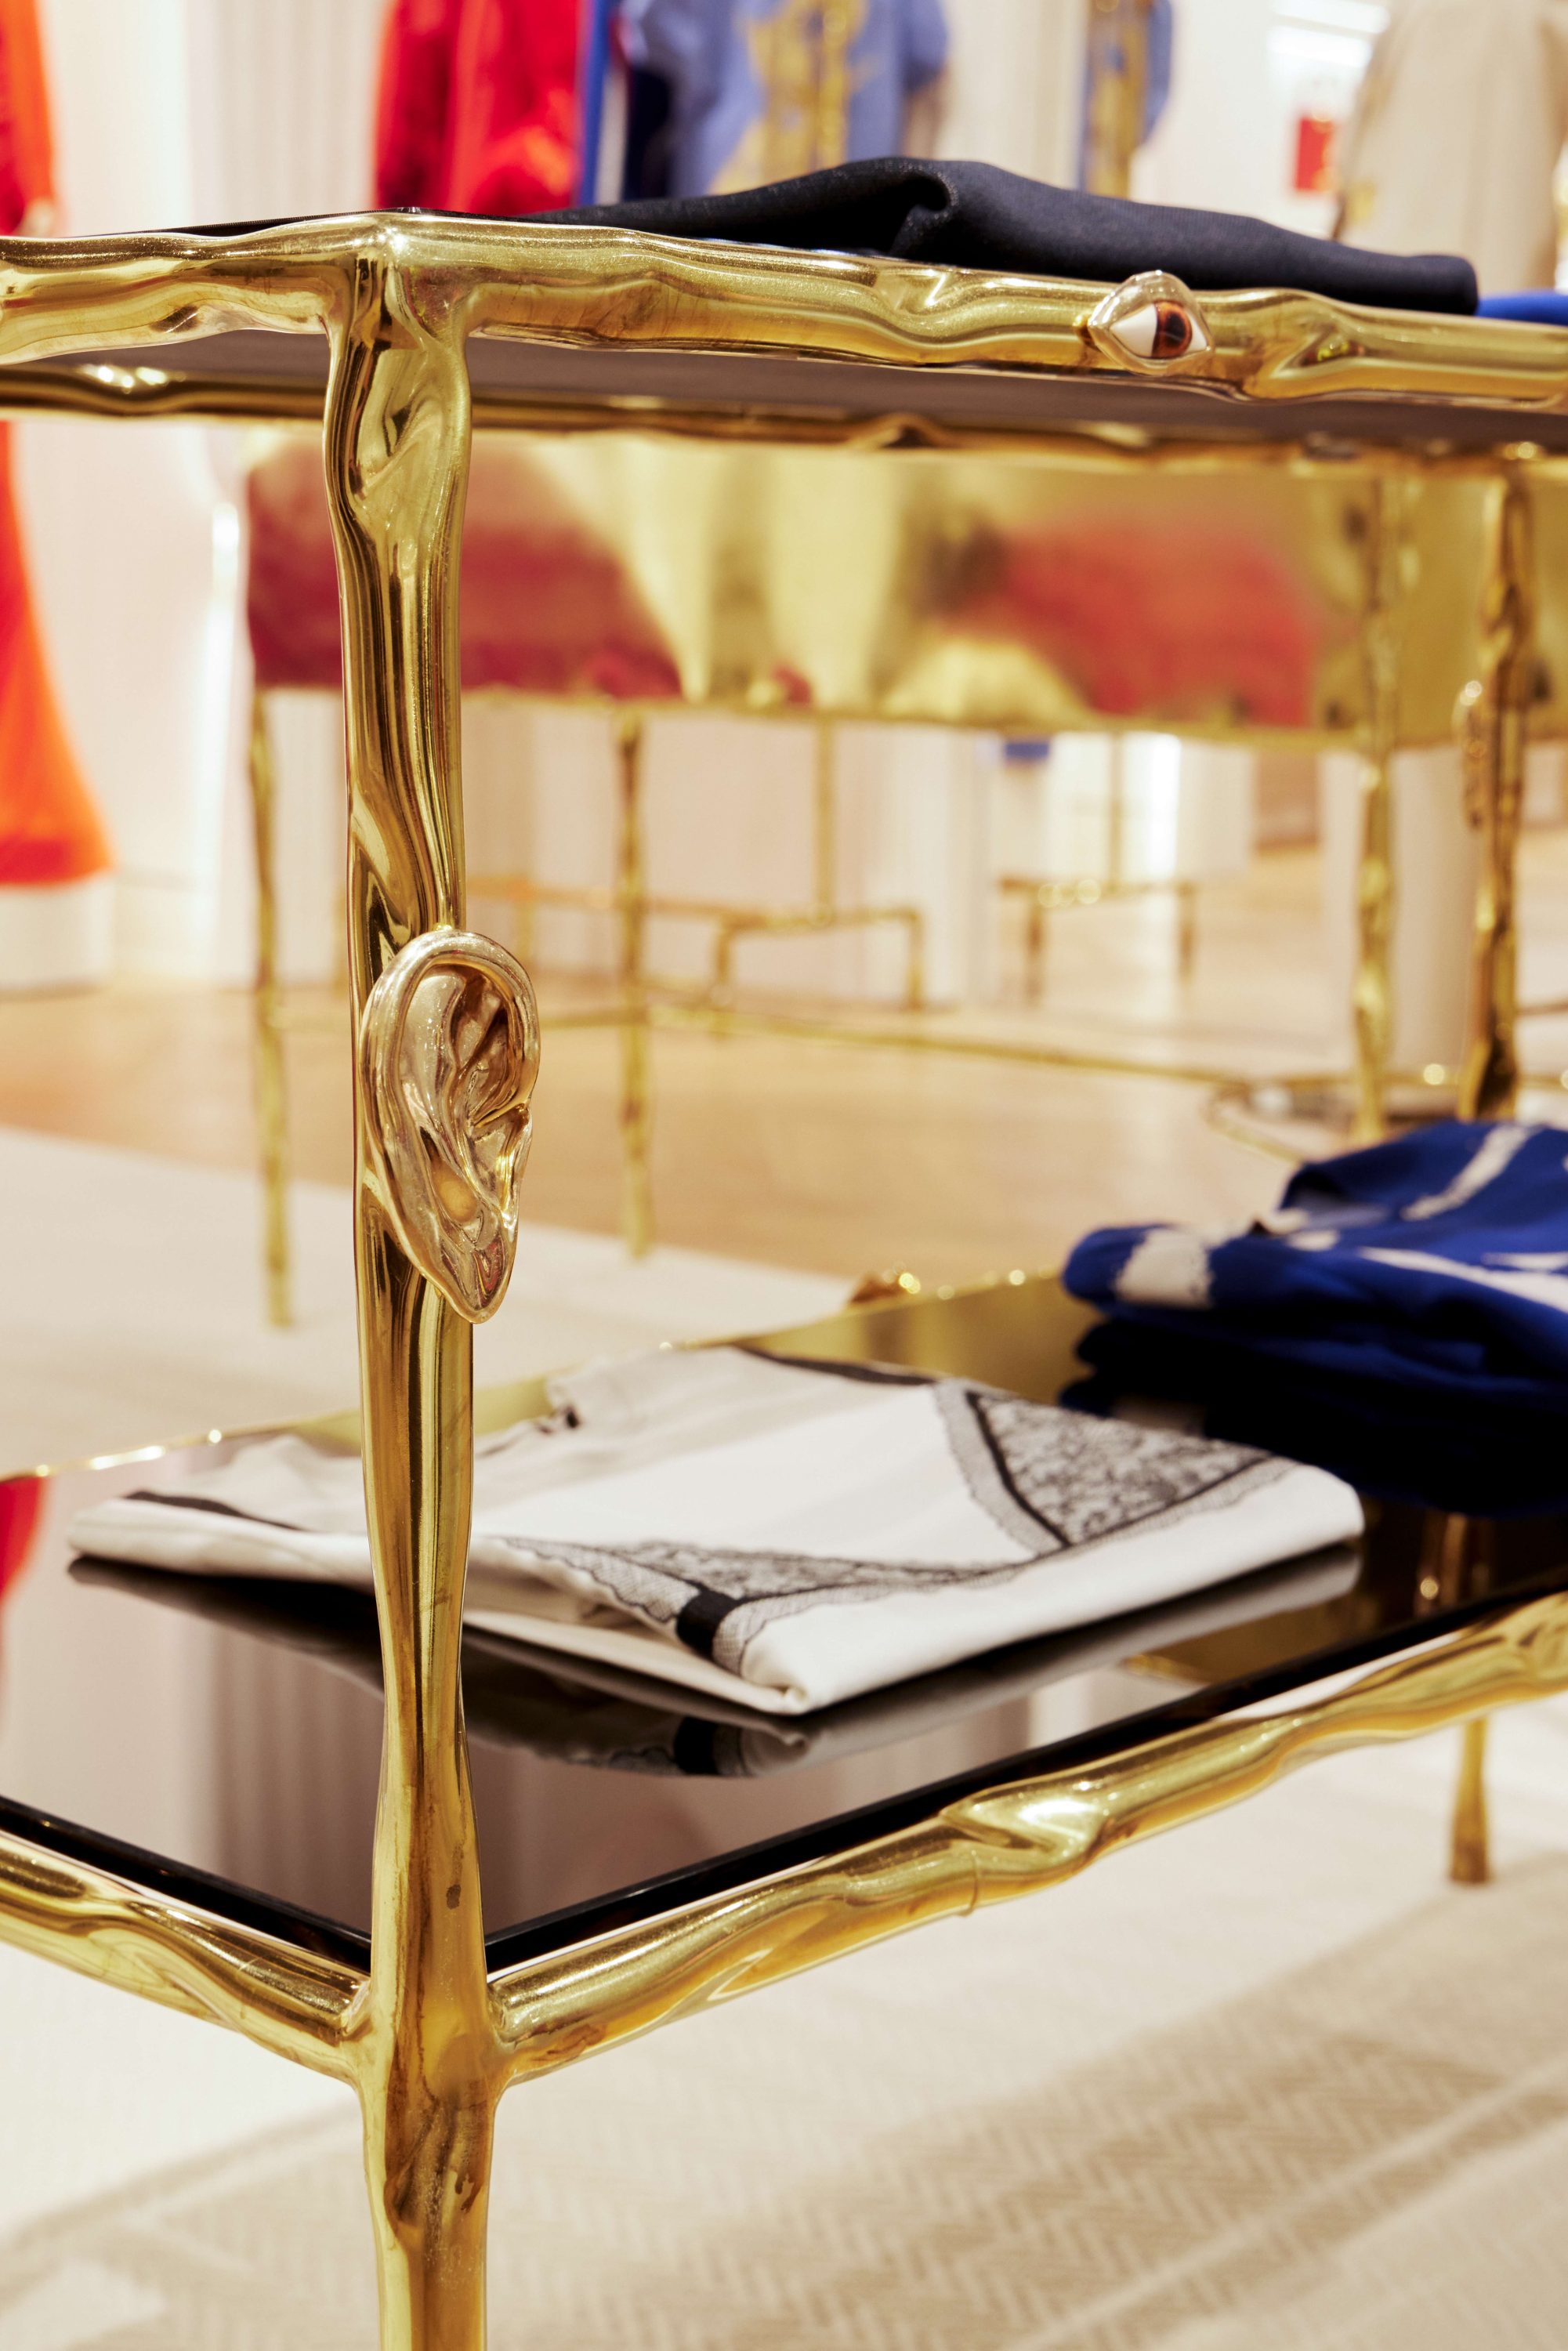 Neiman Marcus Opens Exclusive Schiaparelli Boutique in Beverly